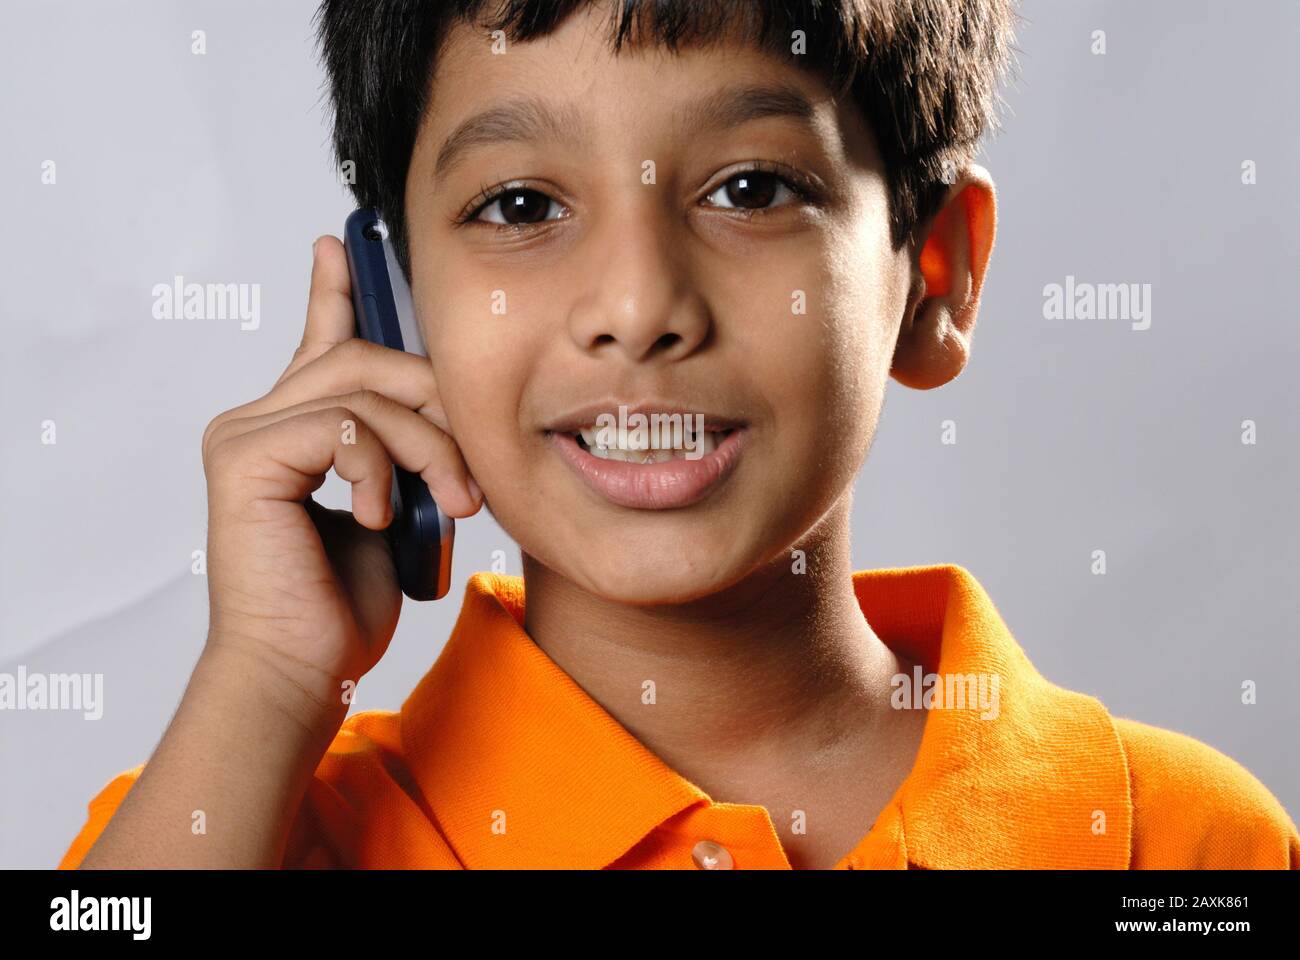 Mumbai, Maharashtra, India- Asia, Supt. 30, 2006 - Indian little cute  naughty boy funny expression talking on mobile phone Stock Photo - Alamy